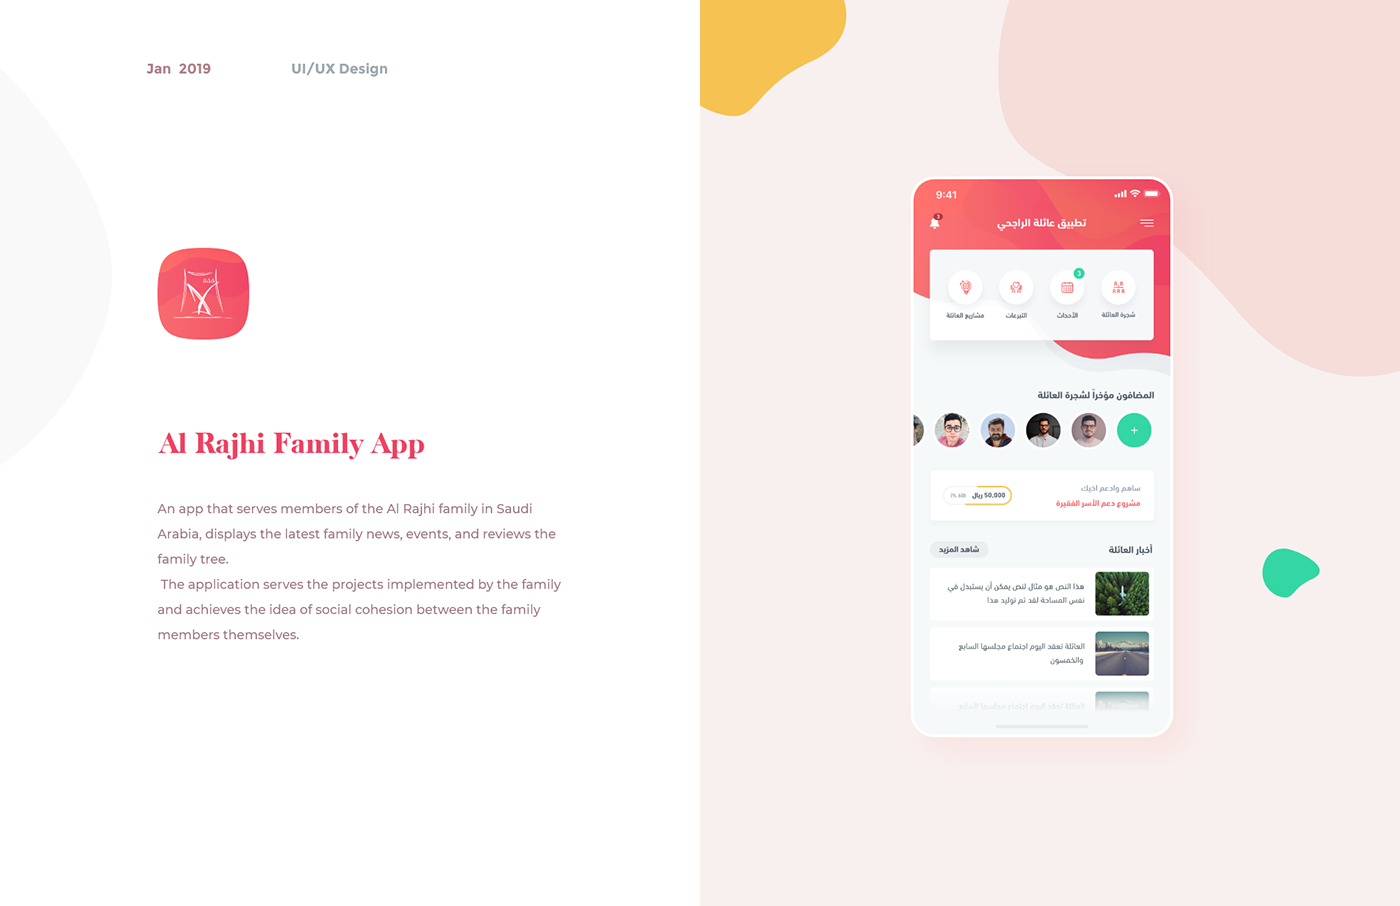 alrajhi Family App Family Tree ui design family app design saudi arabia family